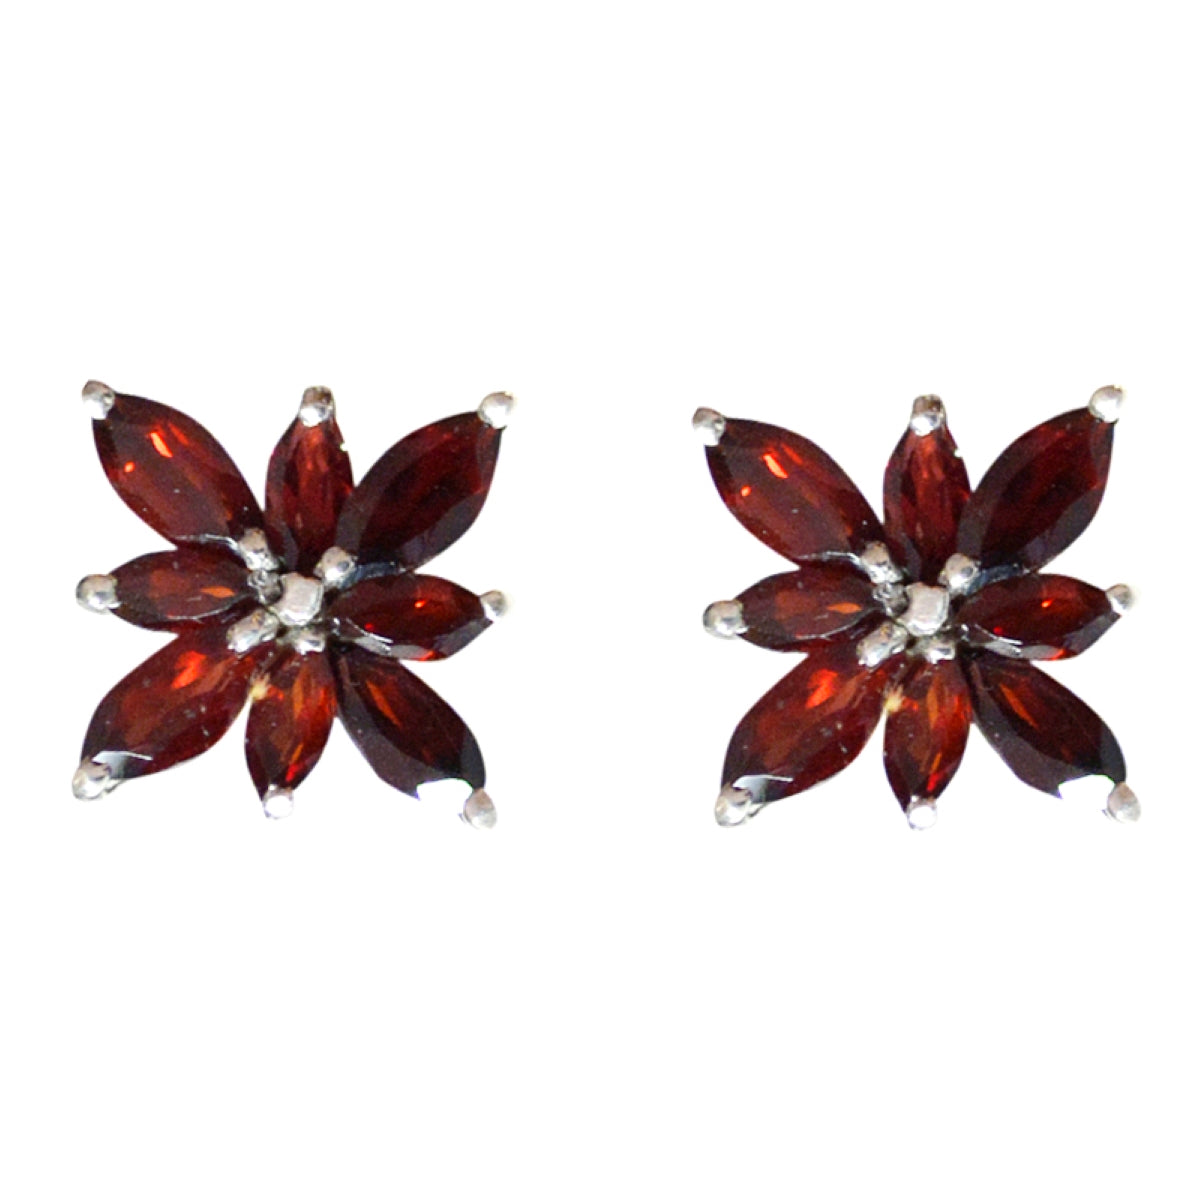 Riyo Nice Gemstone multi shape Faceted Red Garnet Silver Earrings gift for daughter's day